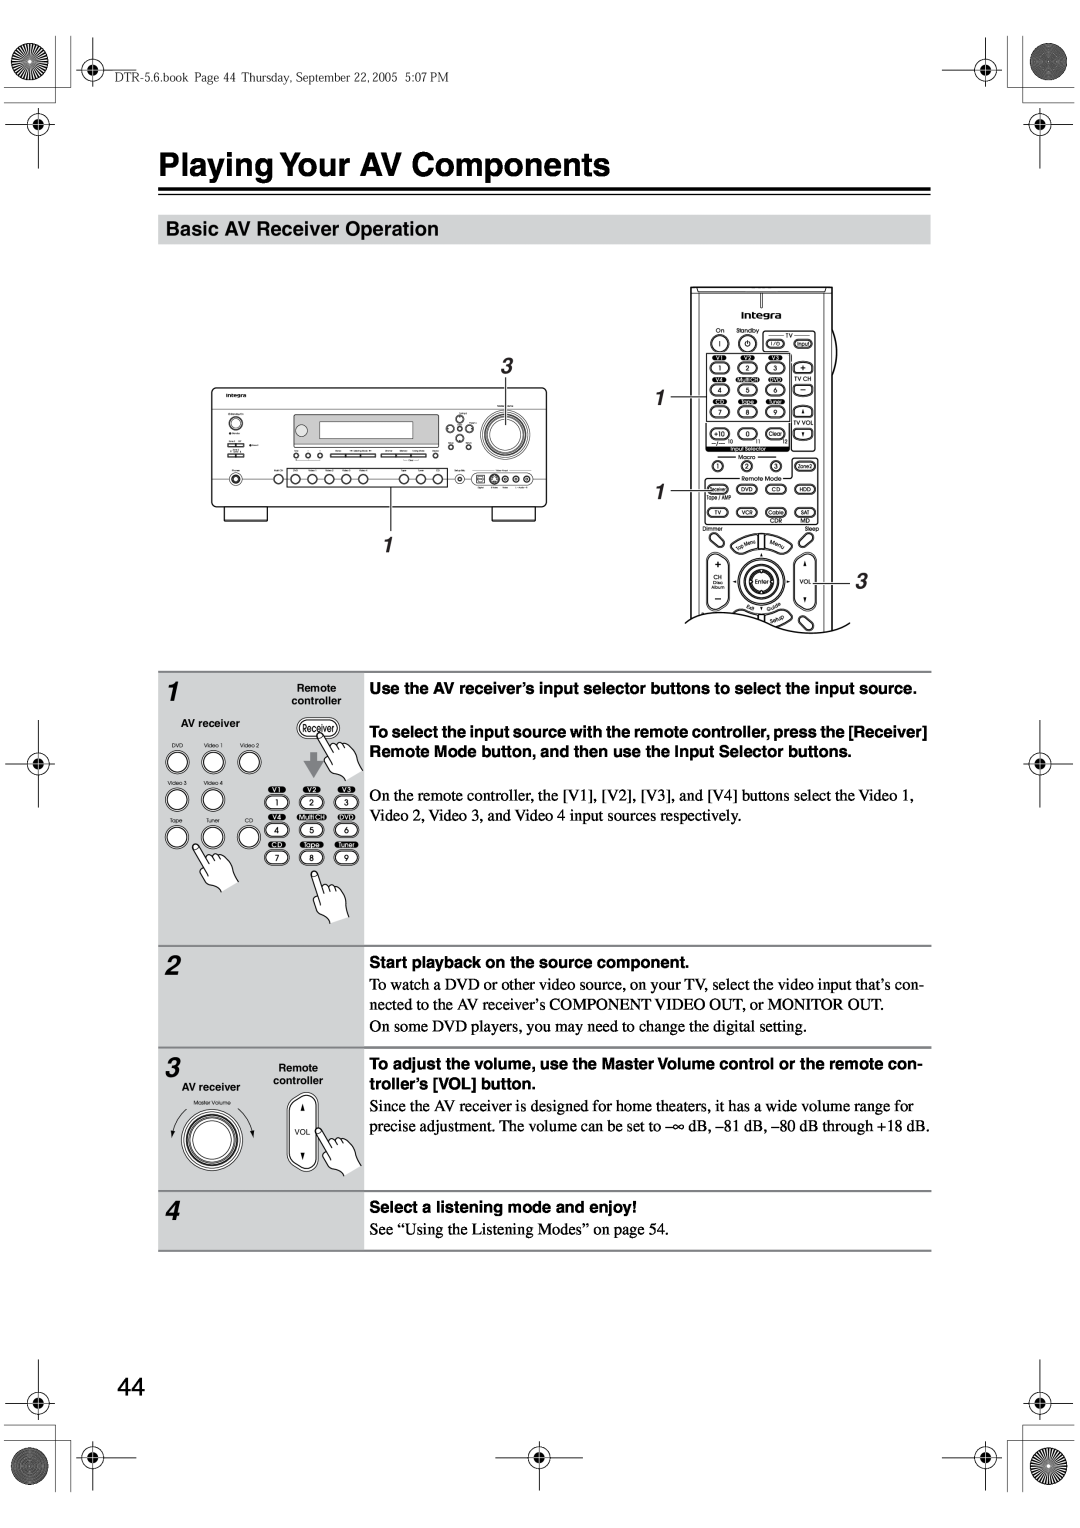 Integra DTR-5.6 instruction manual Playing Your AV Components, 3 1 1 1 3, Basic AV Receiver Operation 